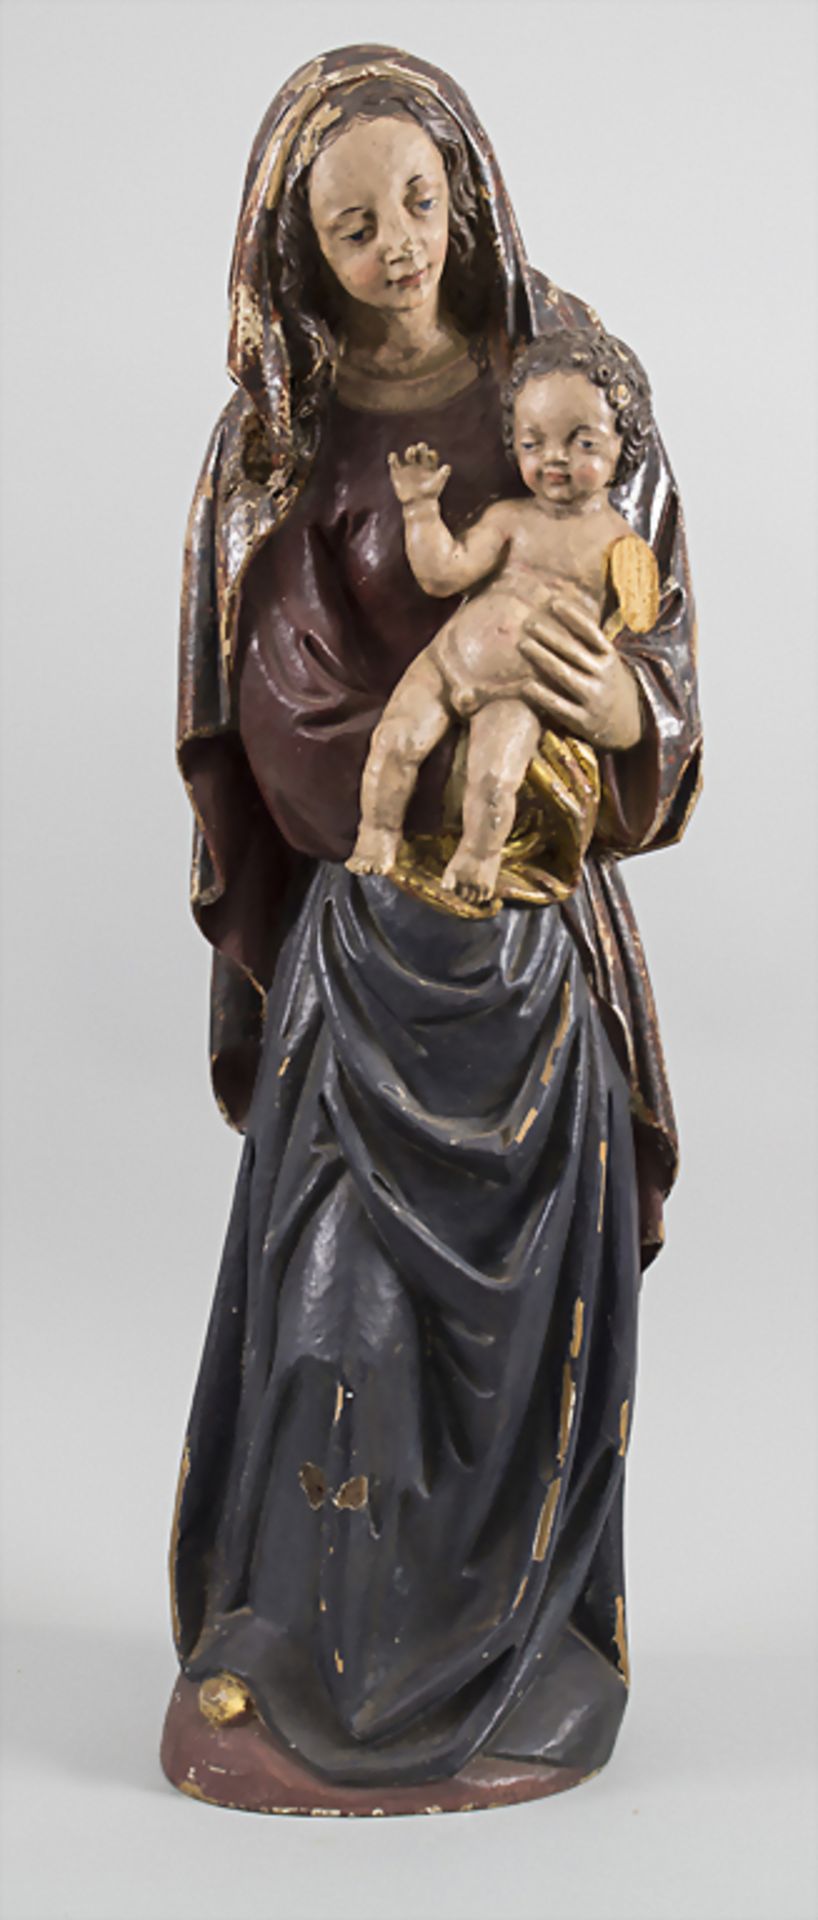 Heiligenfigur 'Maria mit Jesus' / A sacral figure 'Mary and child', um 1800